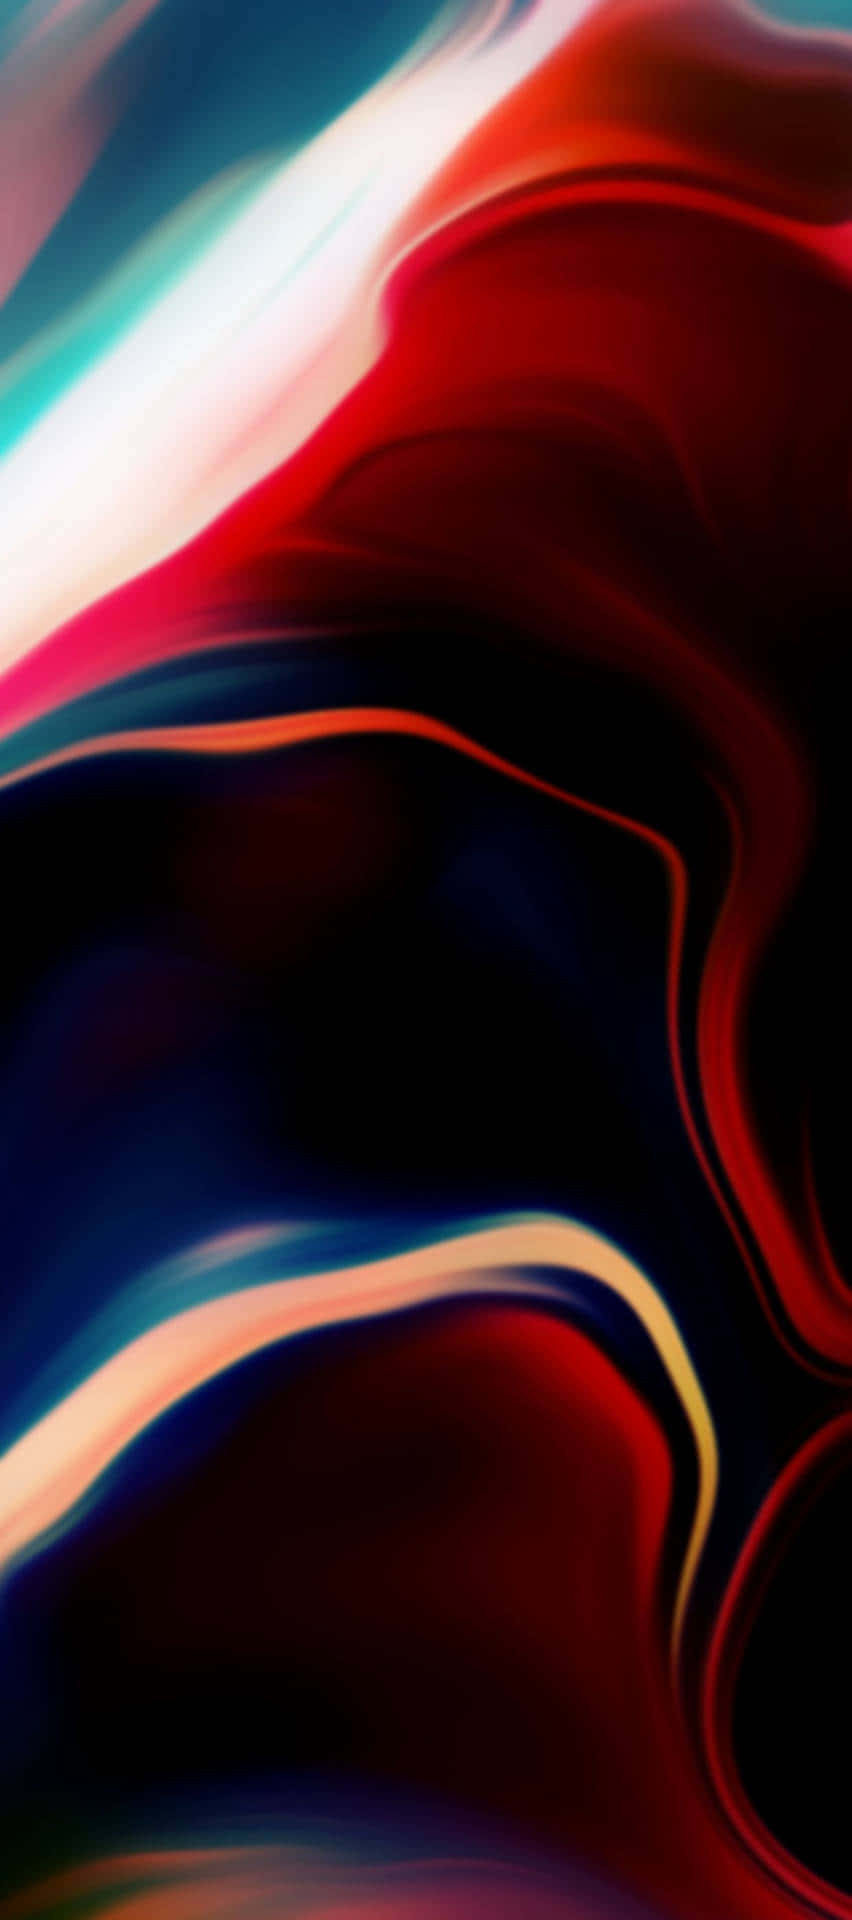 Fluid Colors Apple Iphone X Wallpaper